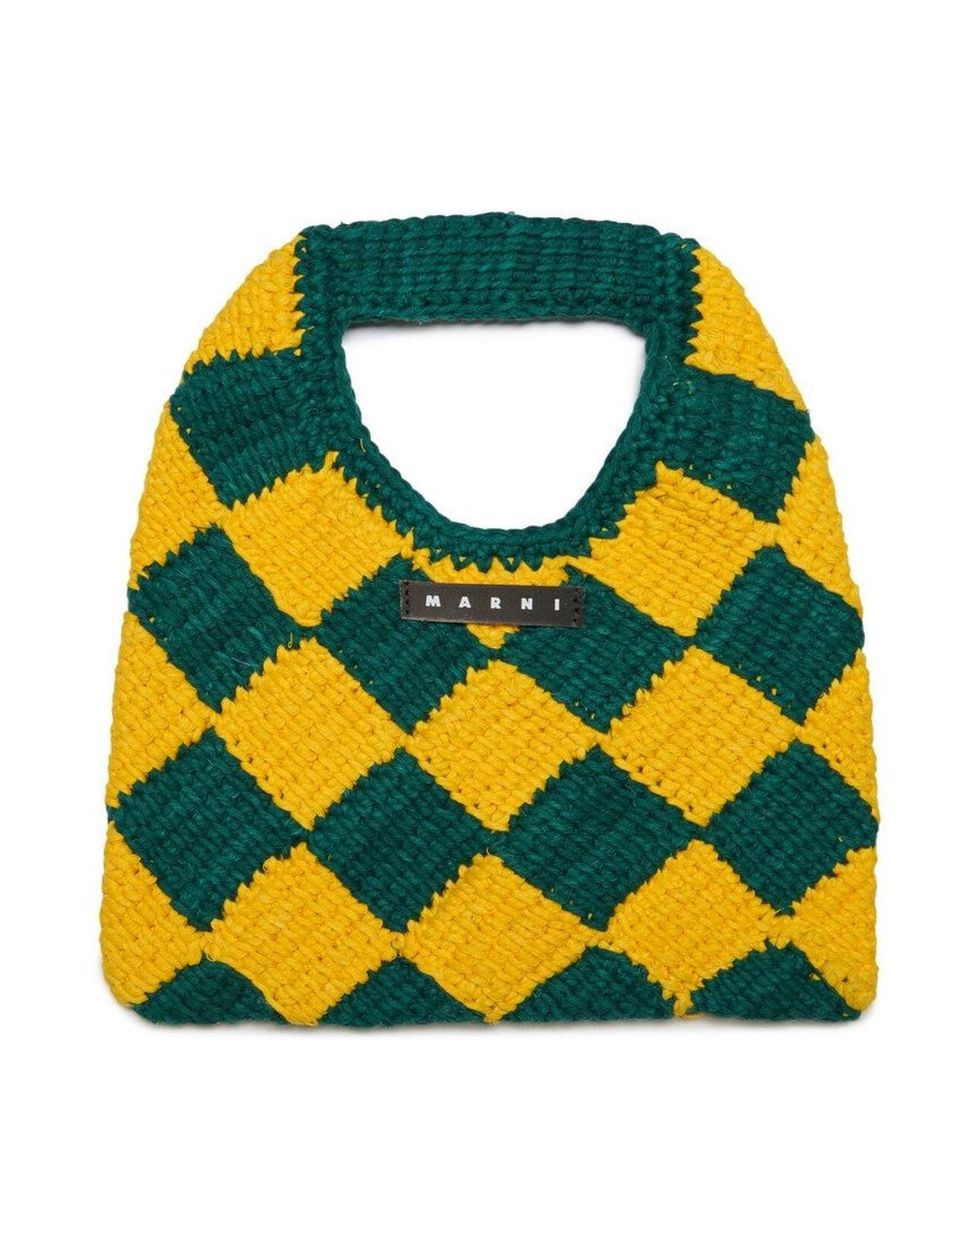 : Diamond Crochet bag